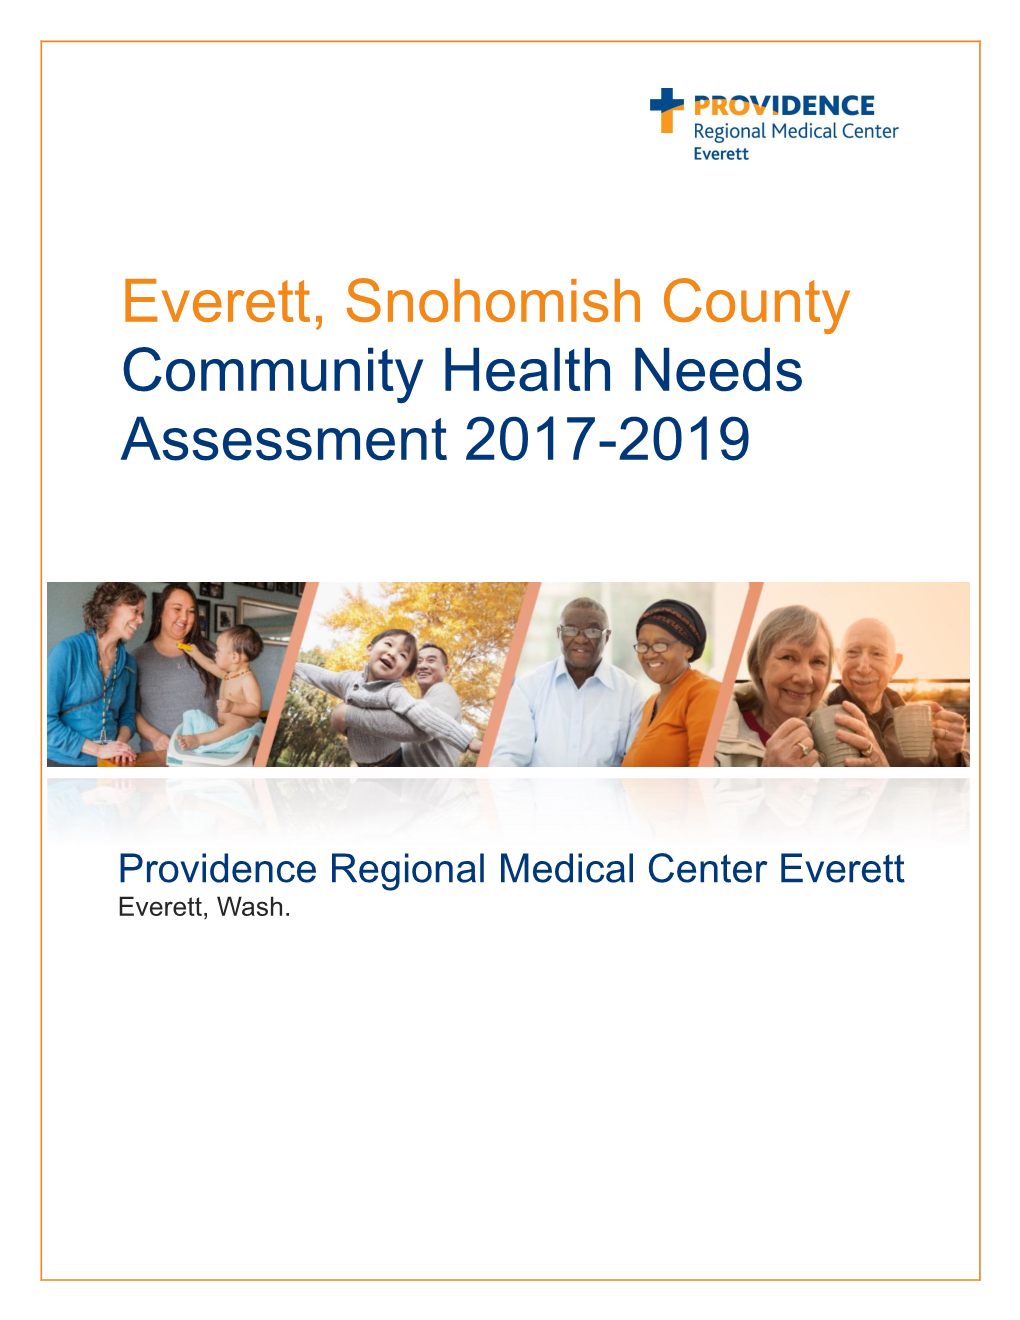 Community Health Needs Assessment 2017-2019